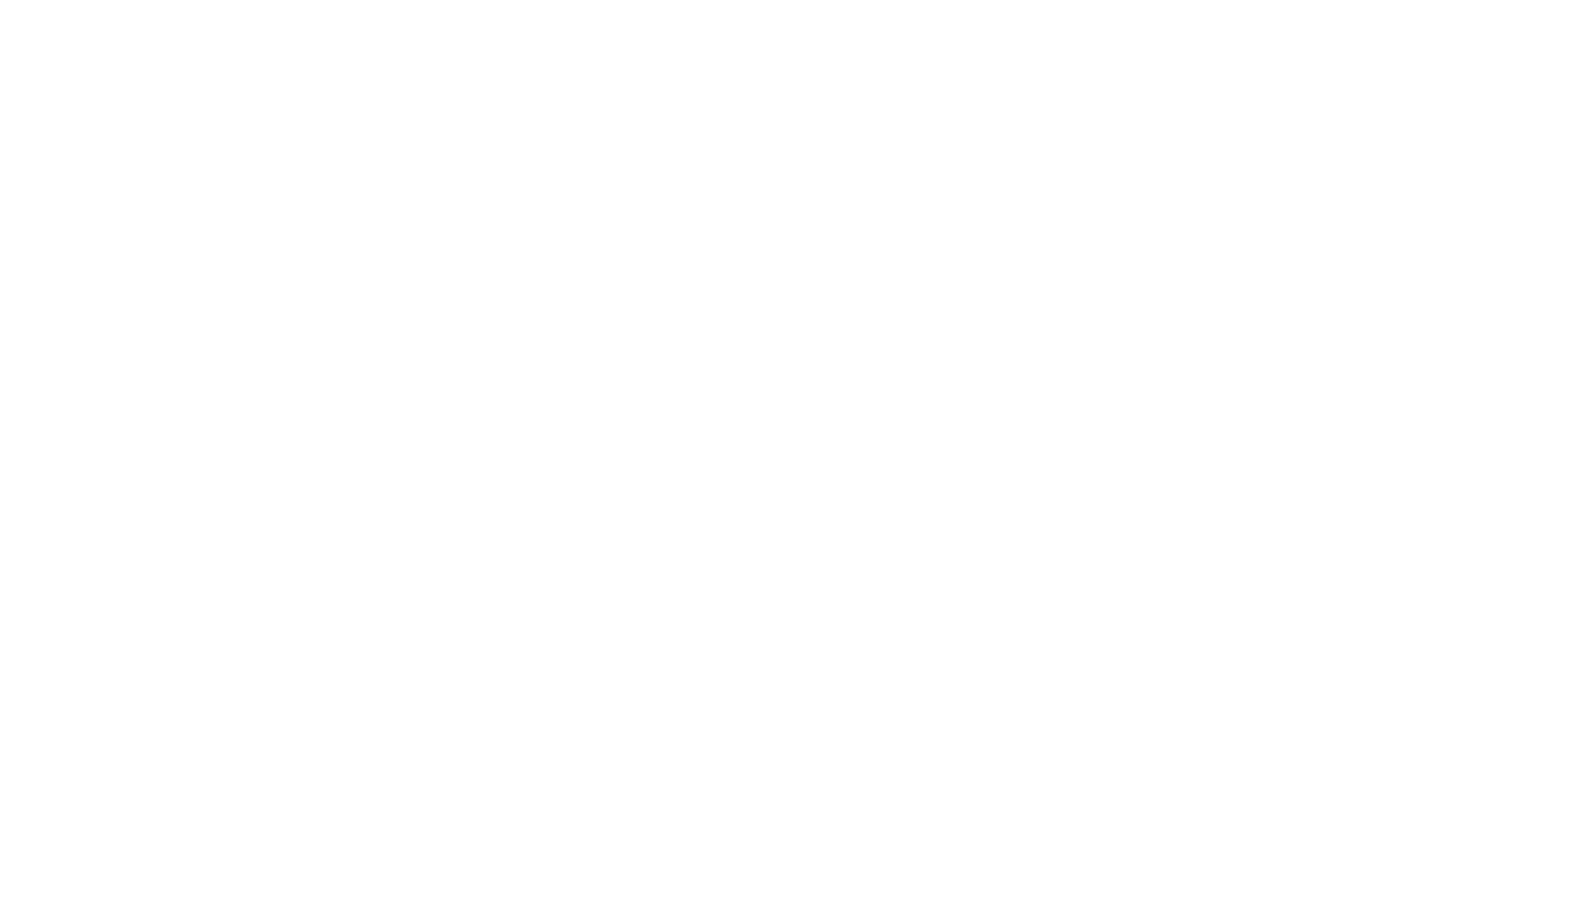 Carbon Neutral Organisation logo